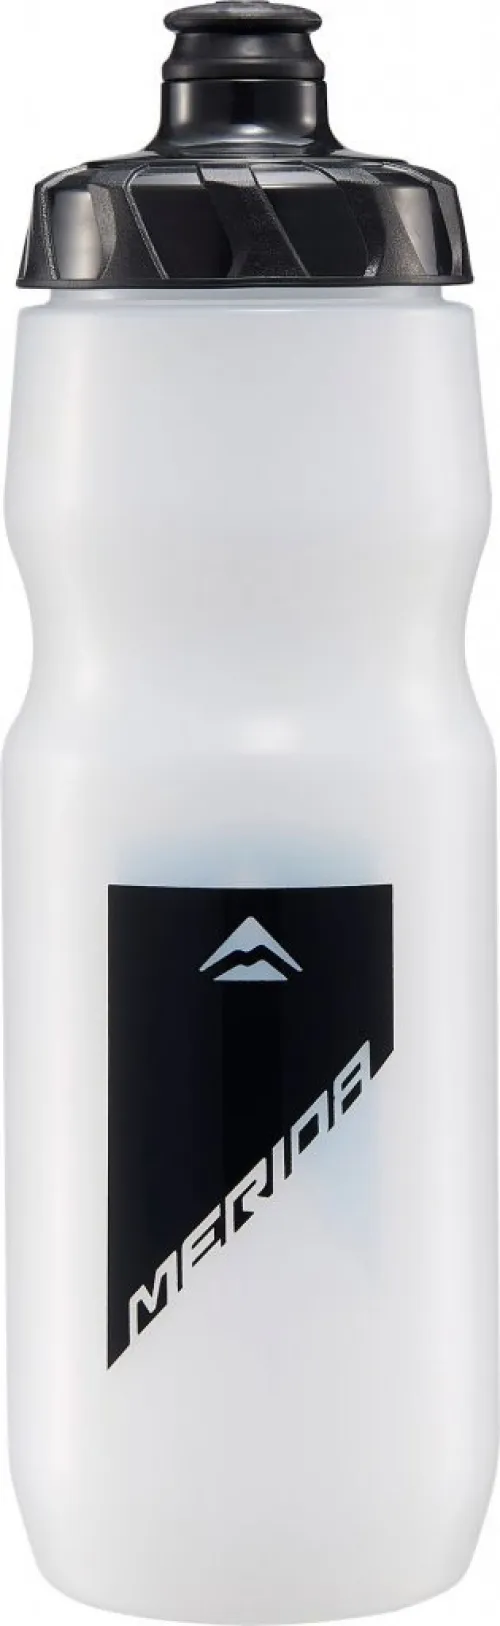 Фляга 0,8 Merida Bottle Transparent Black